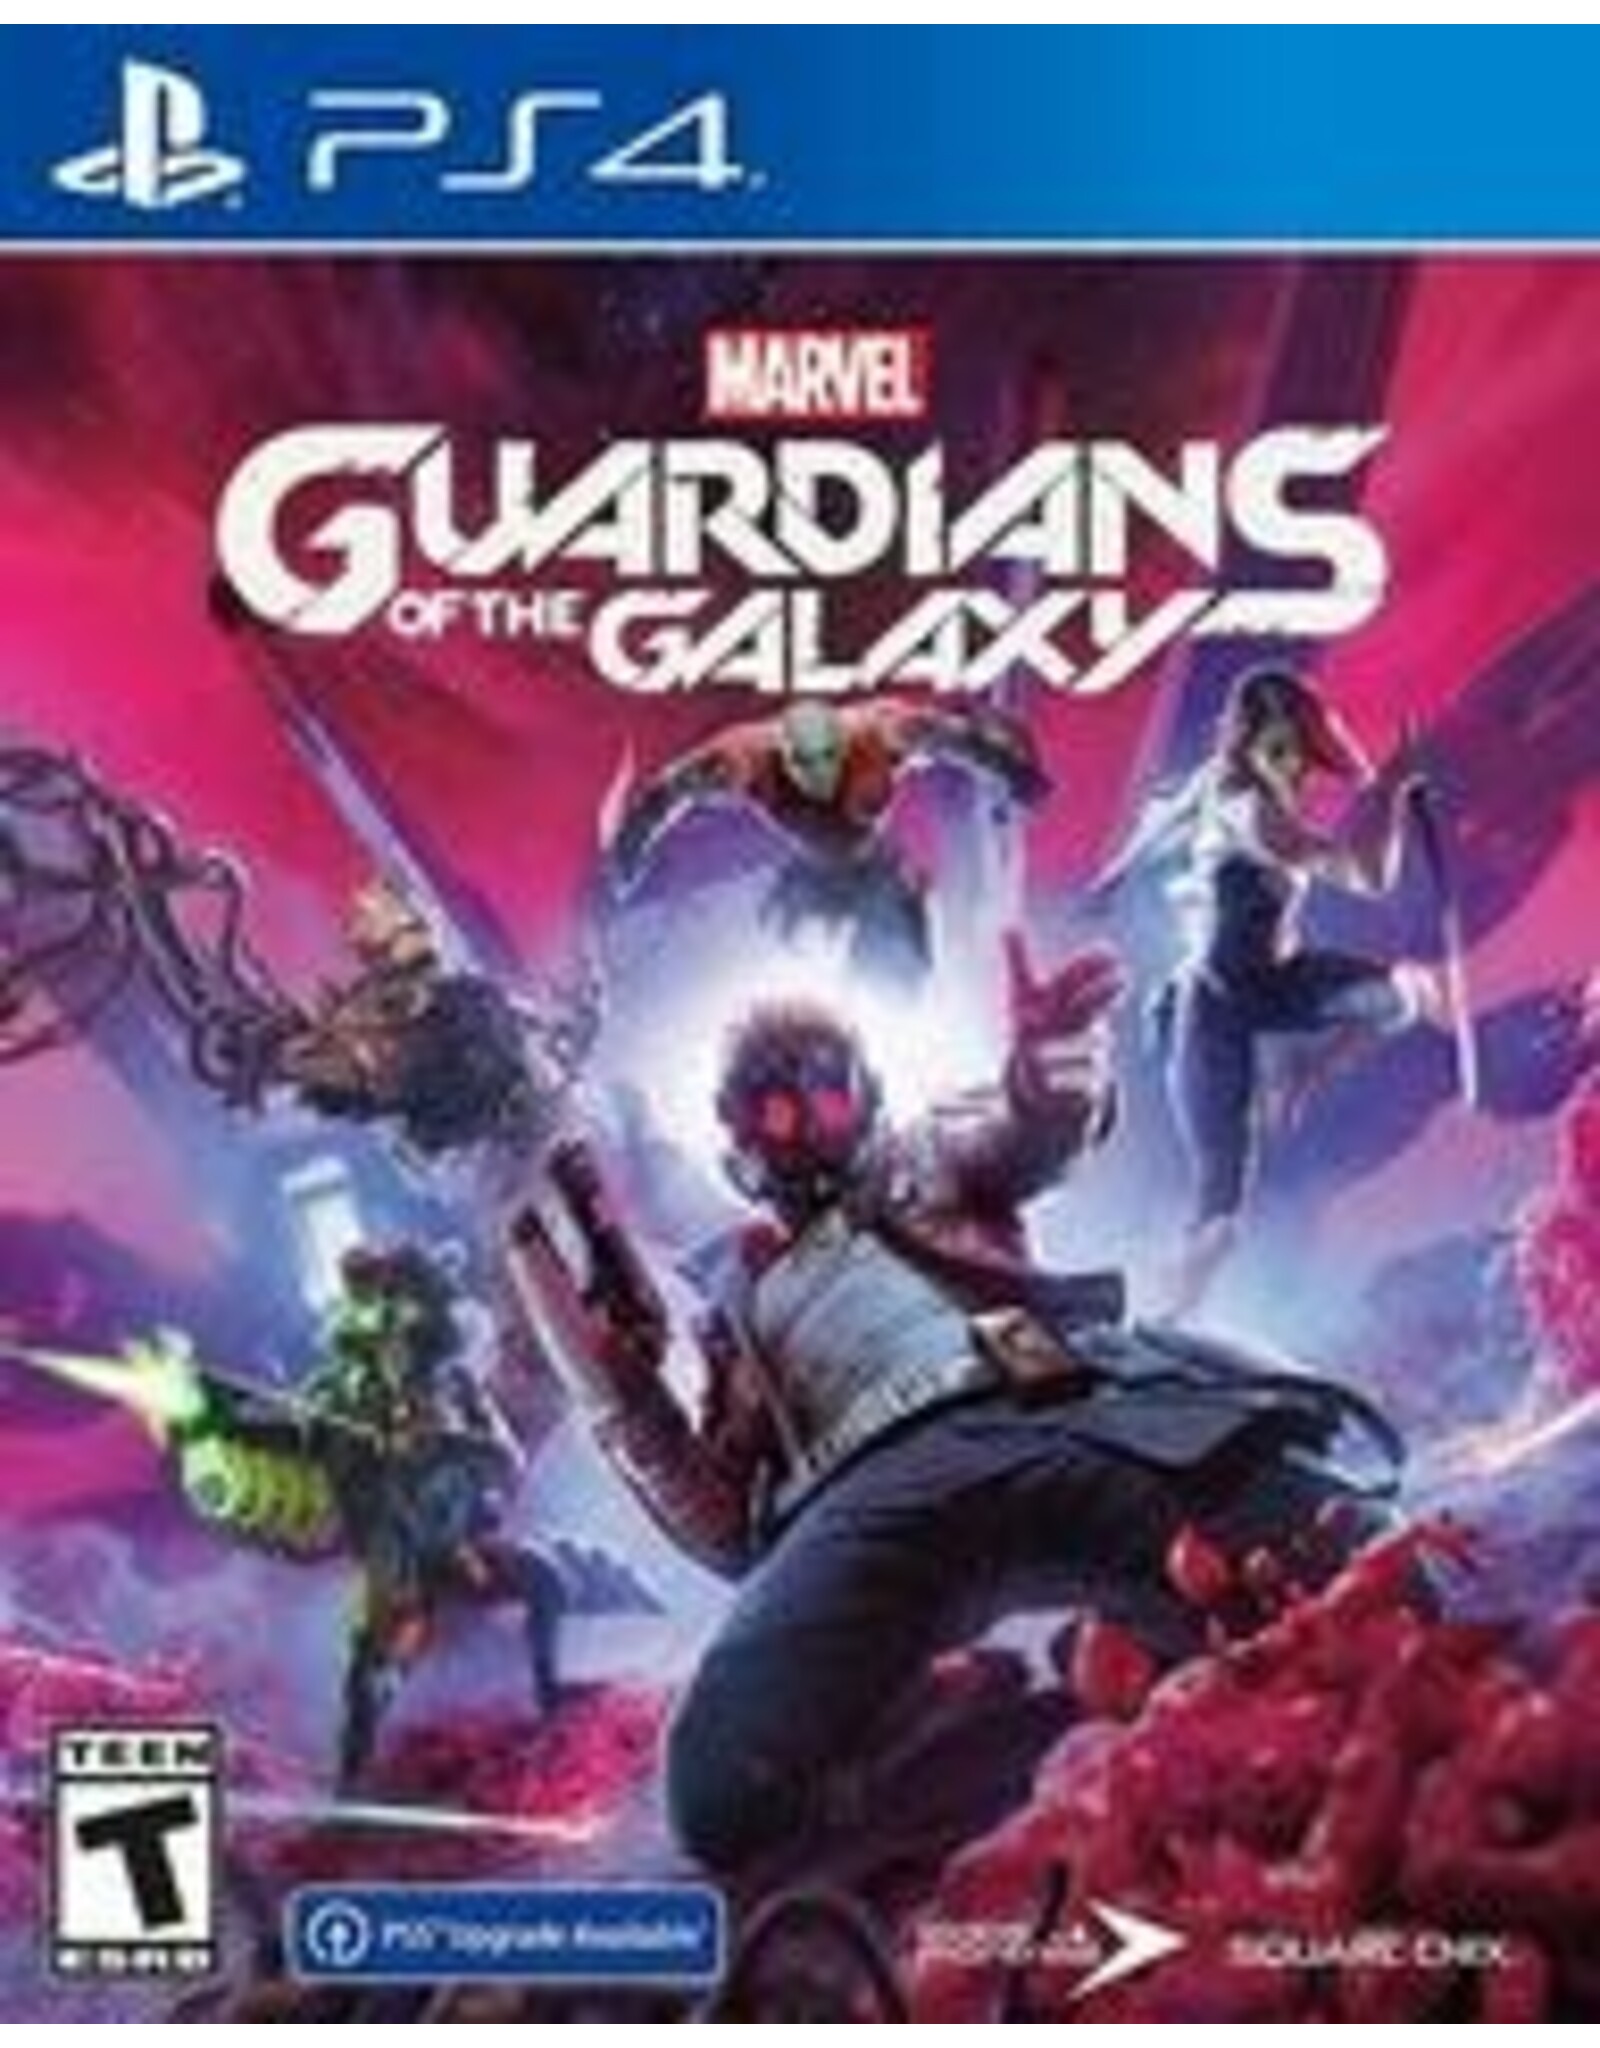 Playstation 4 Guardians of the Galaxy (CiB)